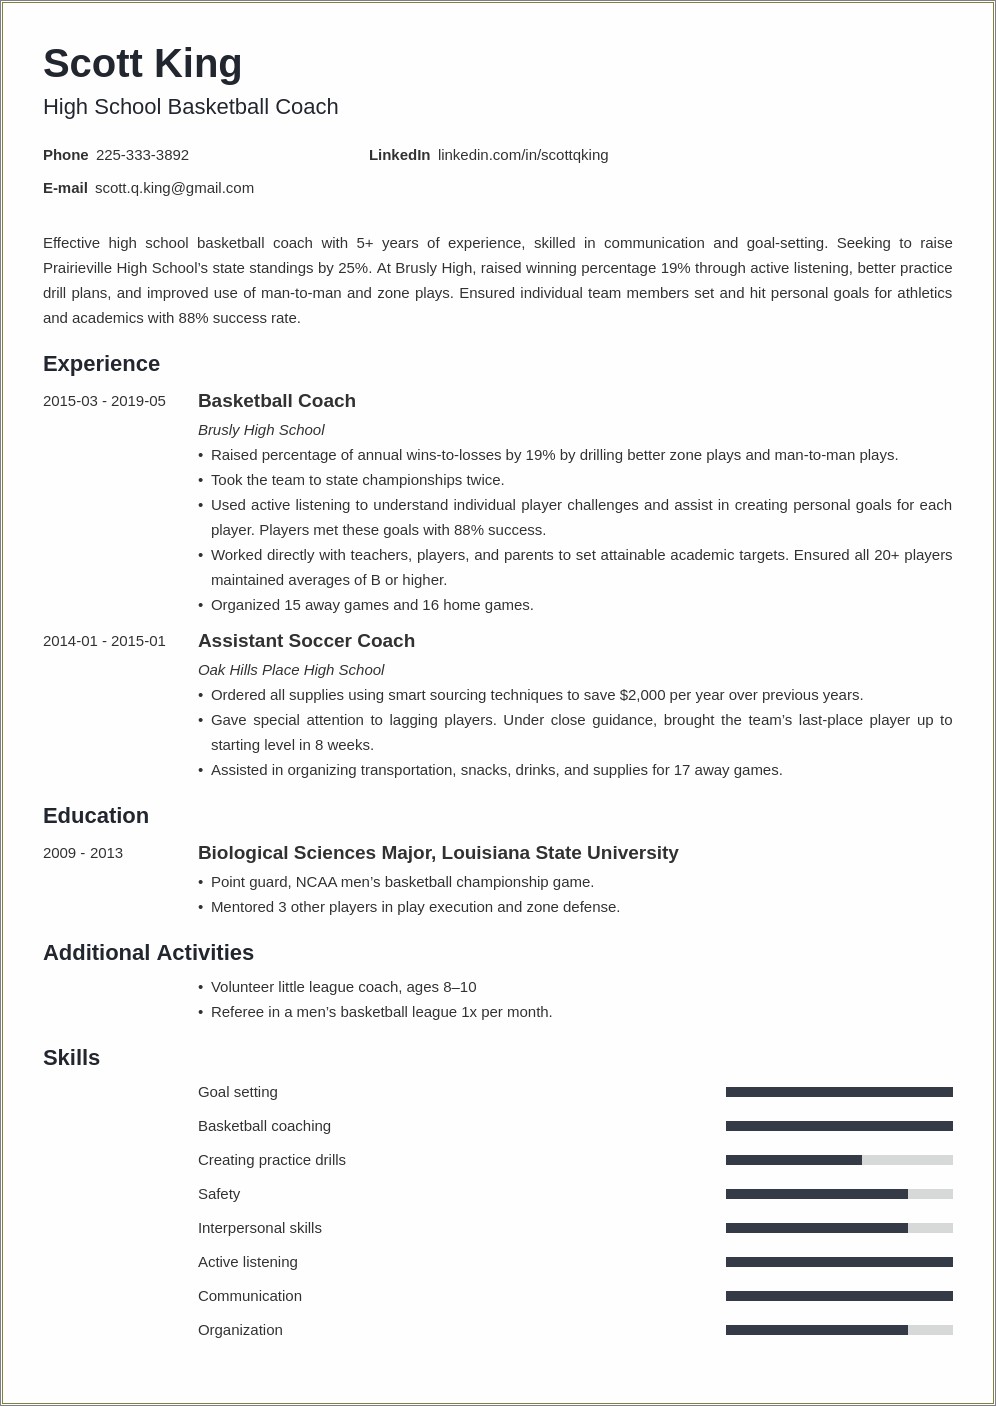 Job Description Of A Professional Football Player Resume